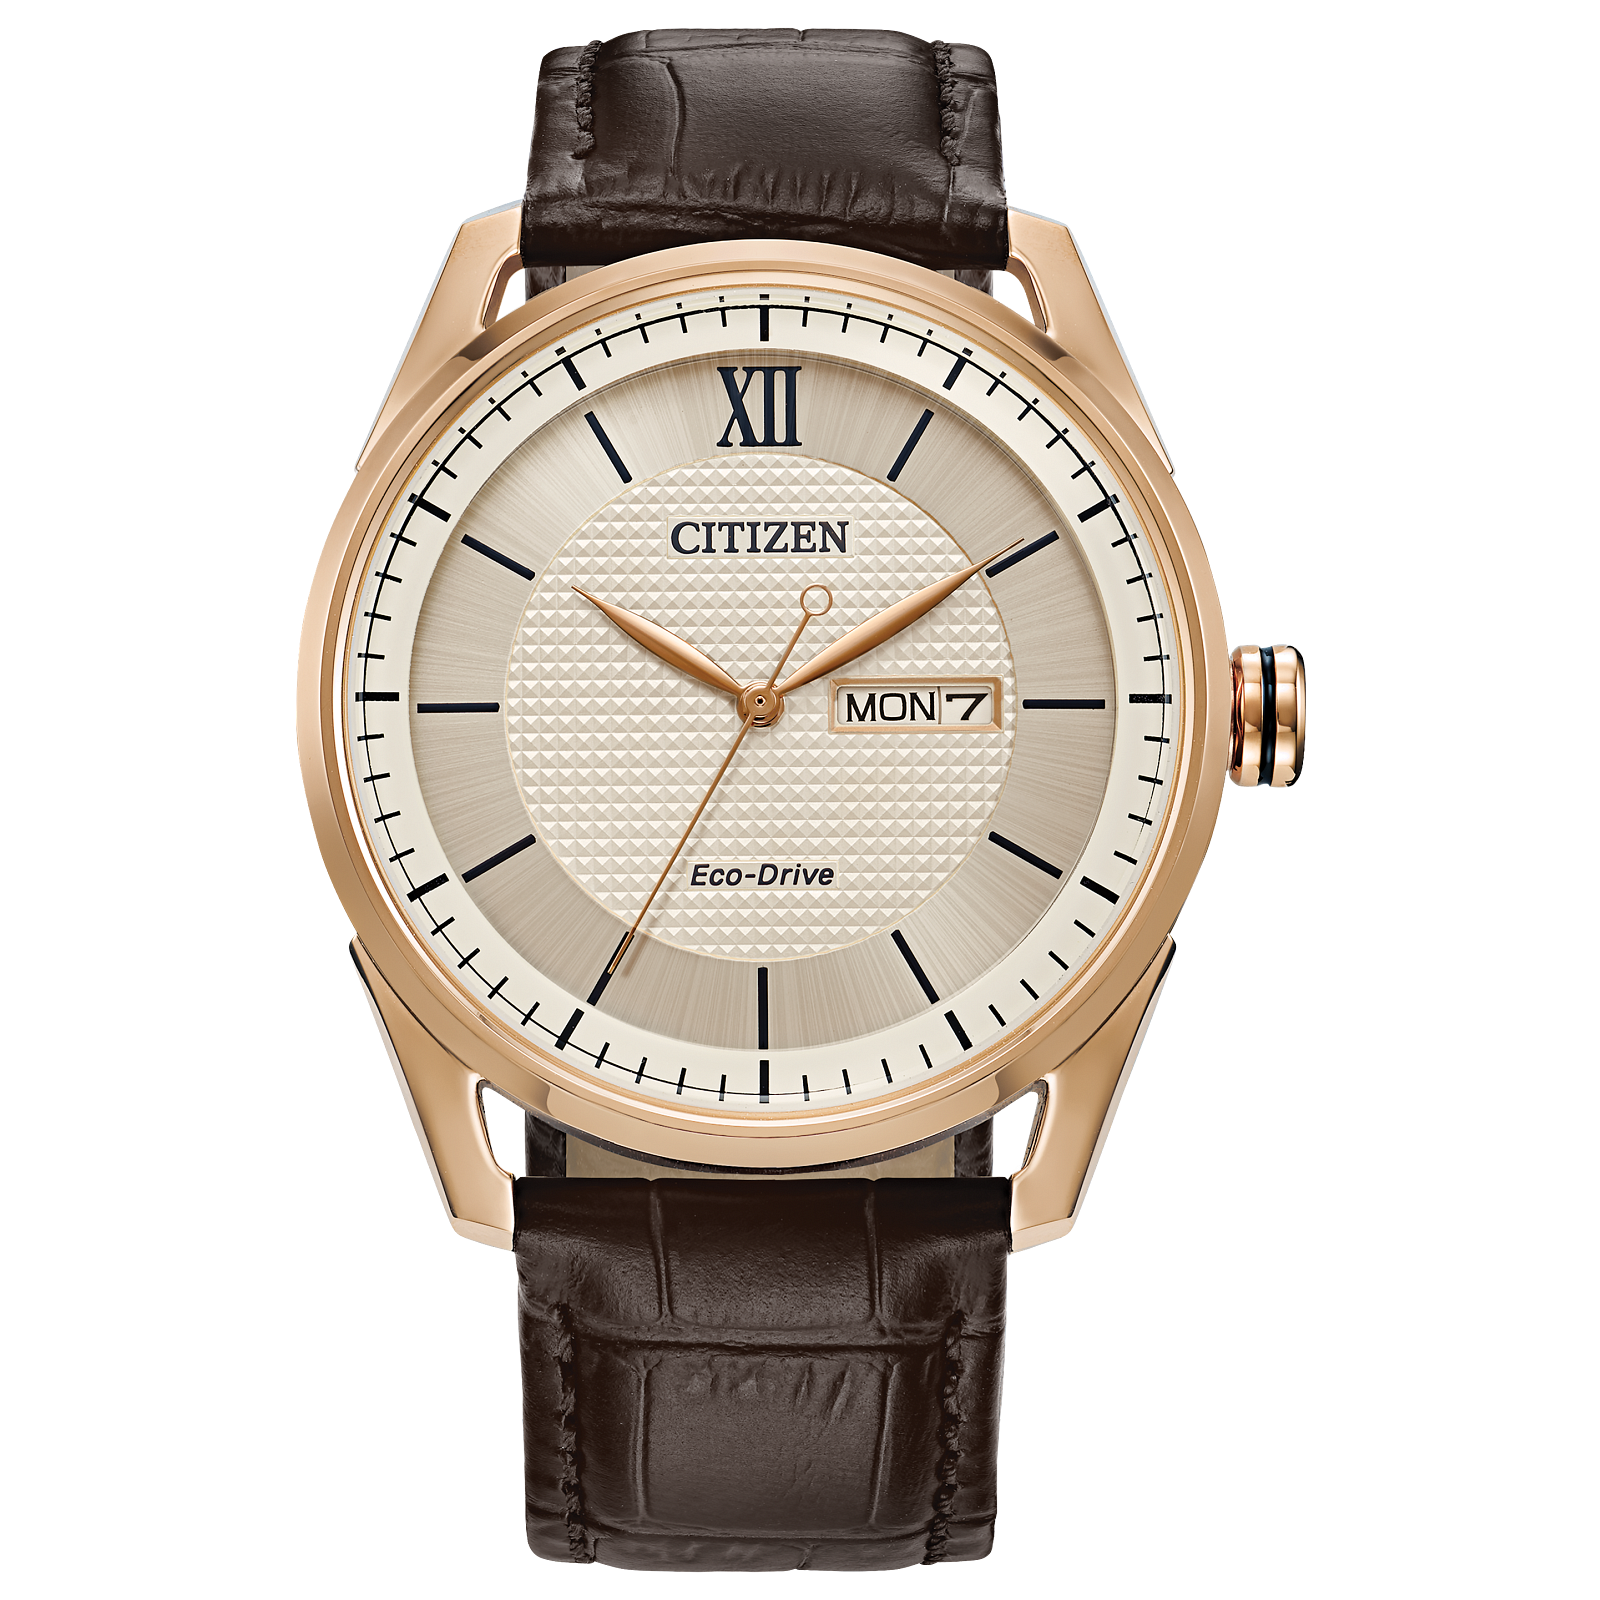 Citizen "Classic" Men's Watch